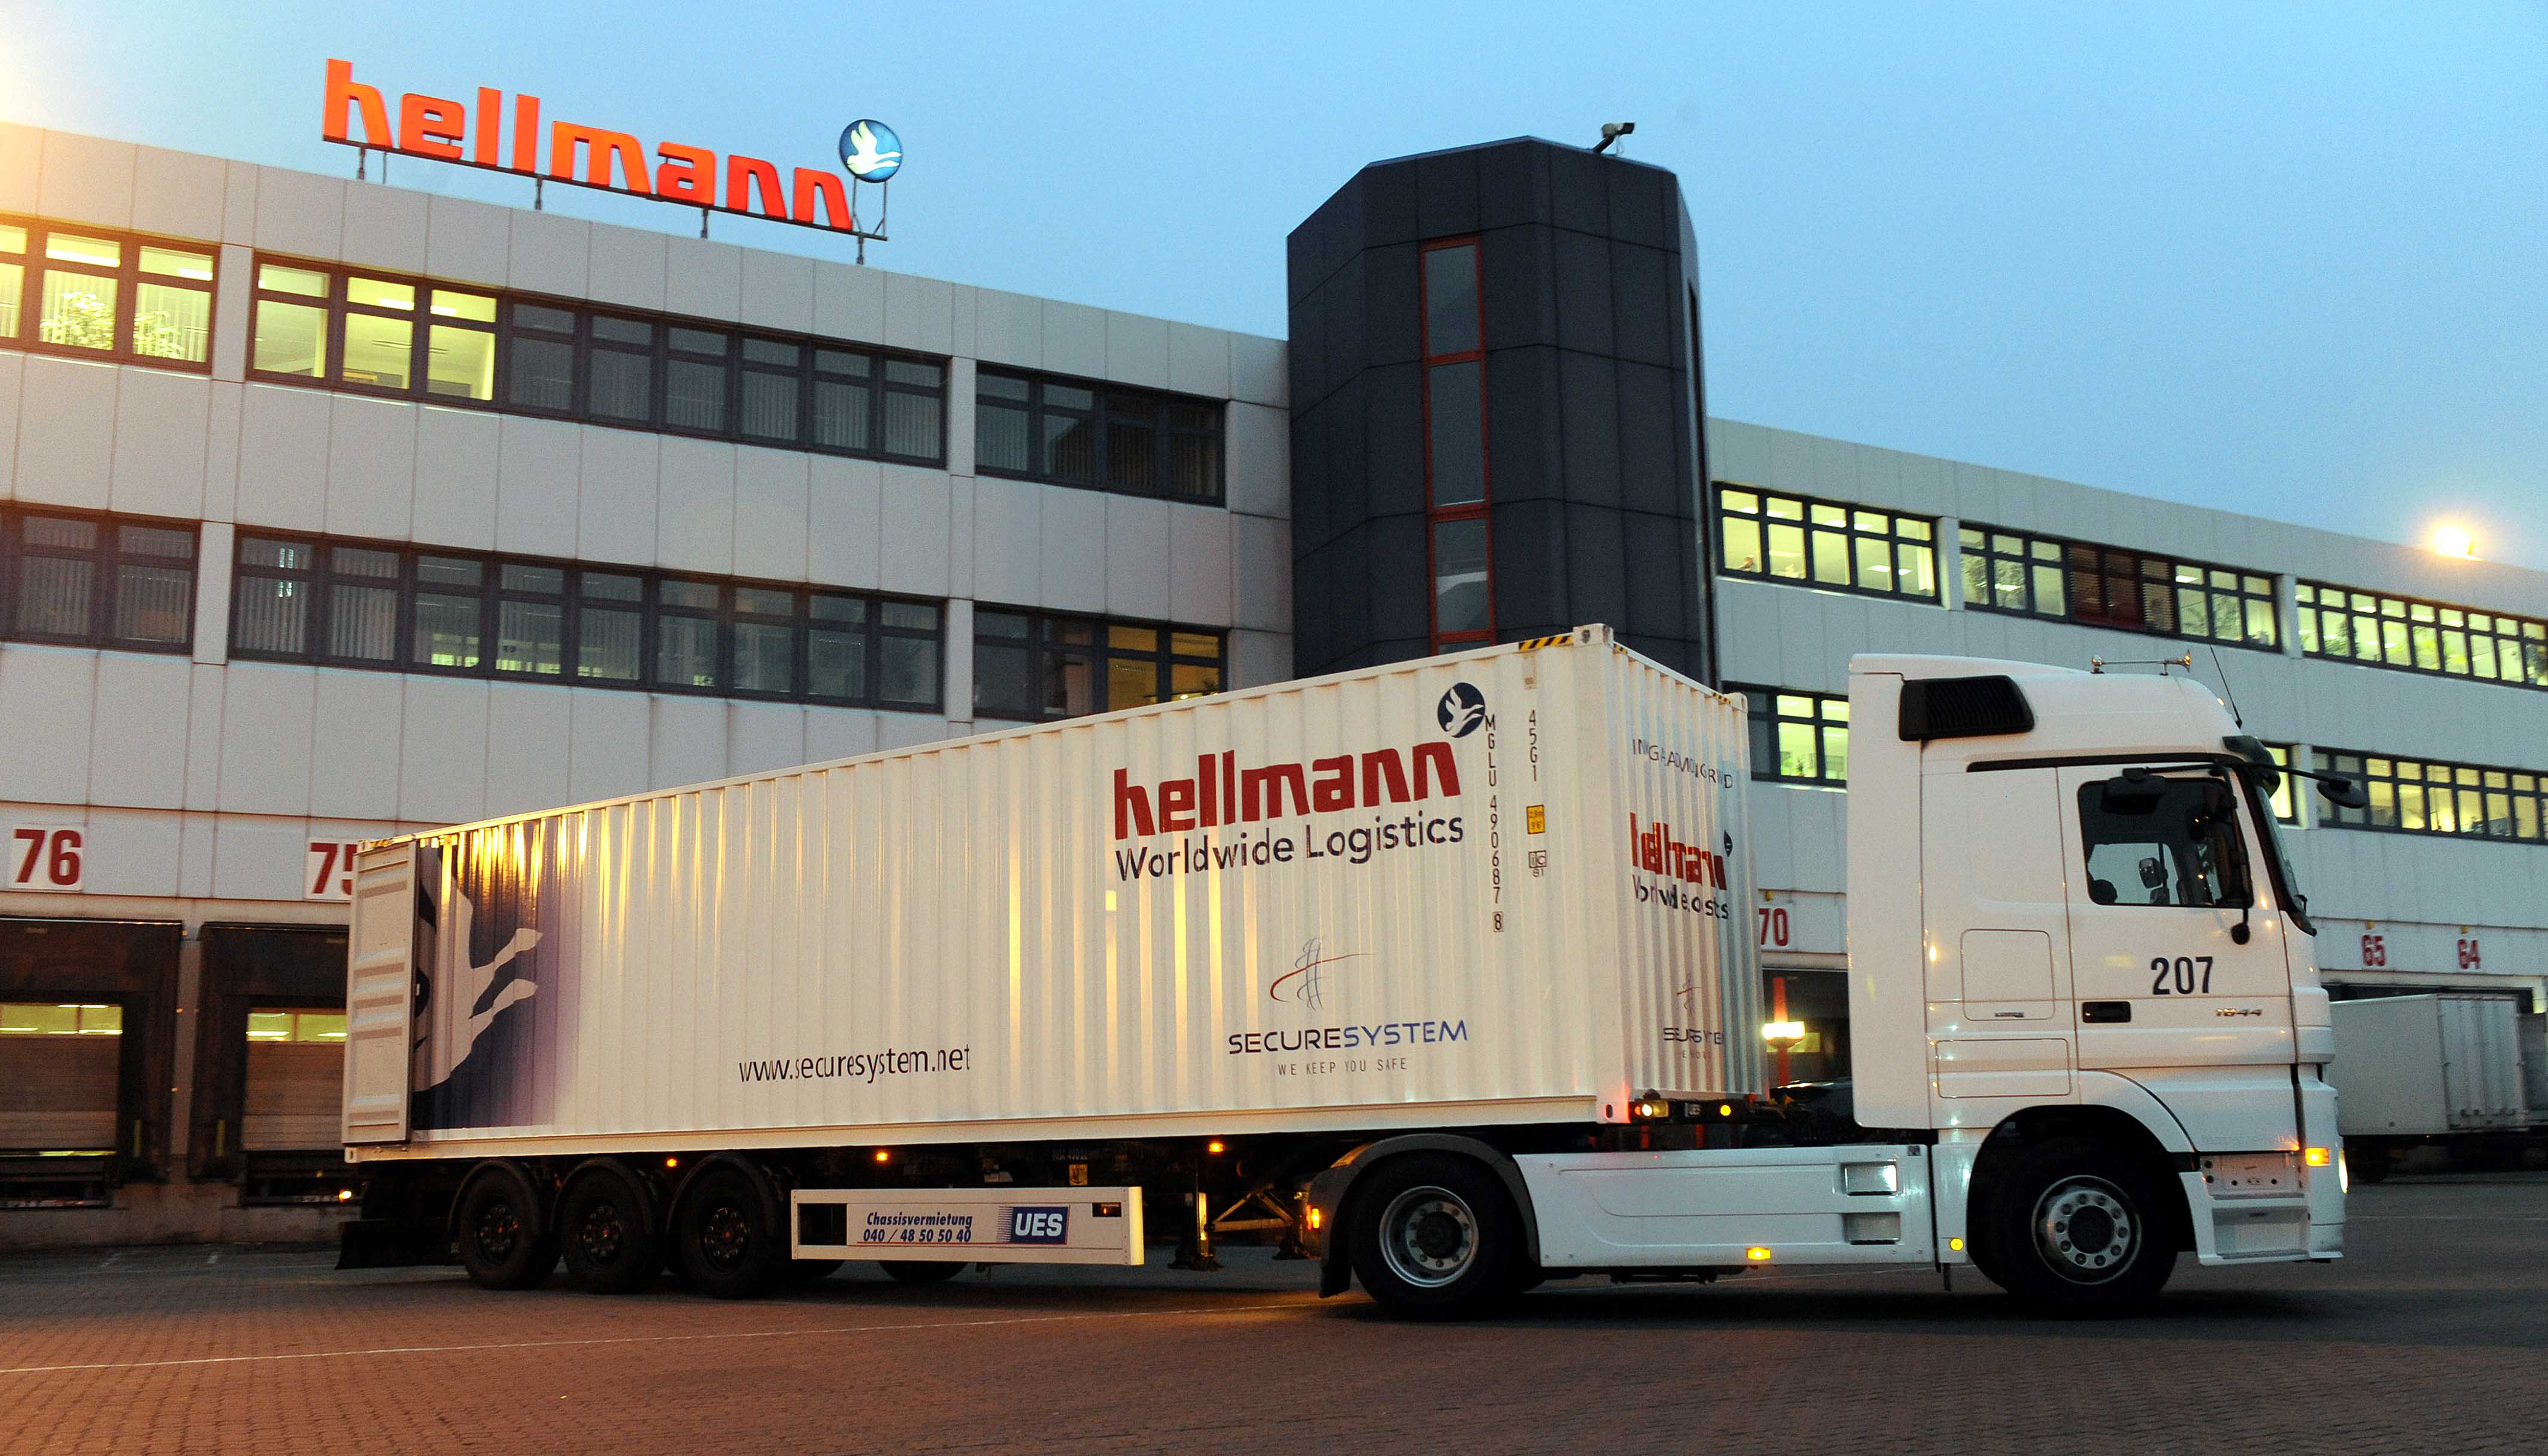 tender manager with hellmann worldwide logistics